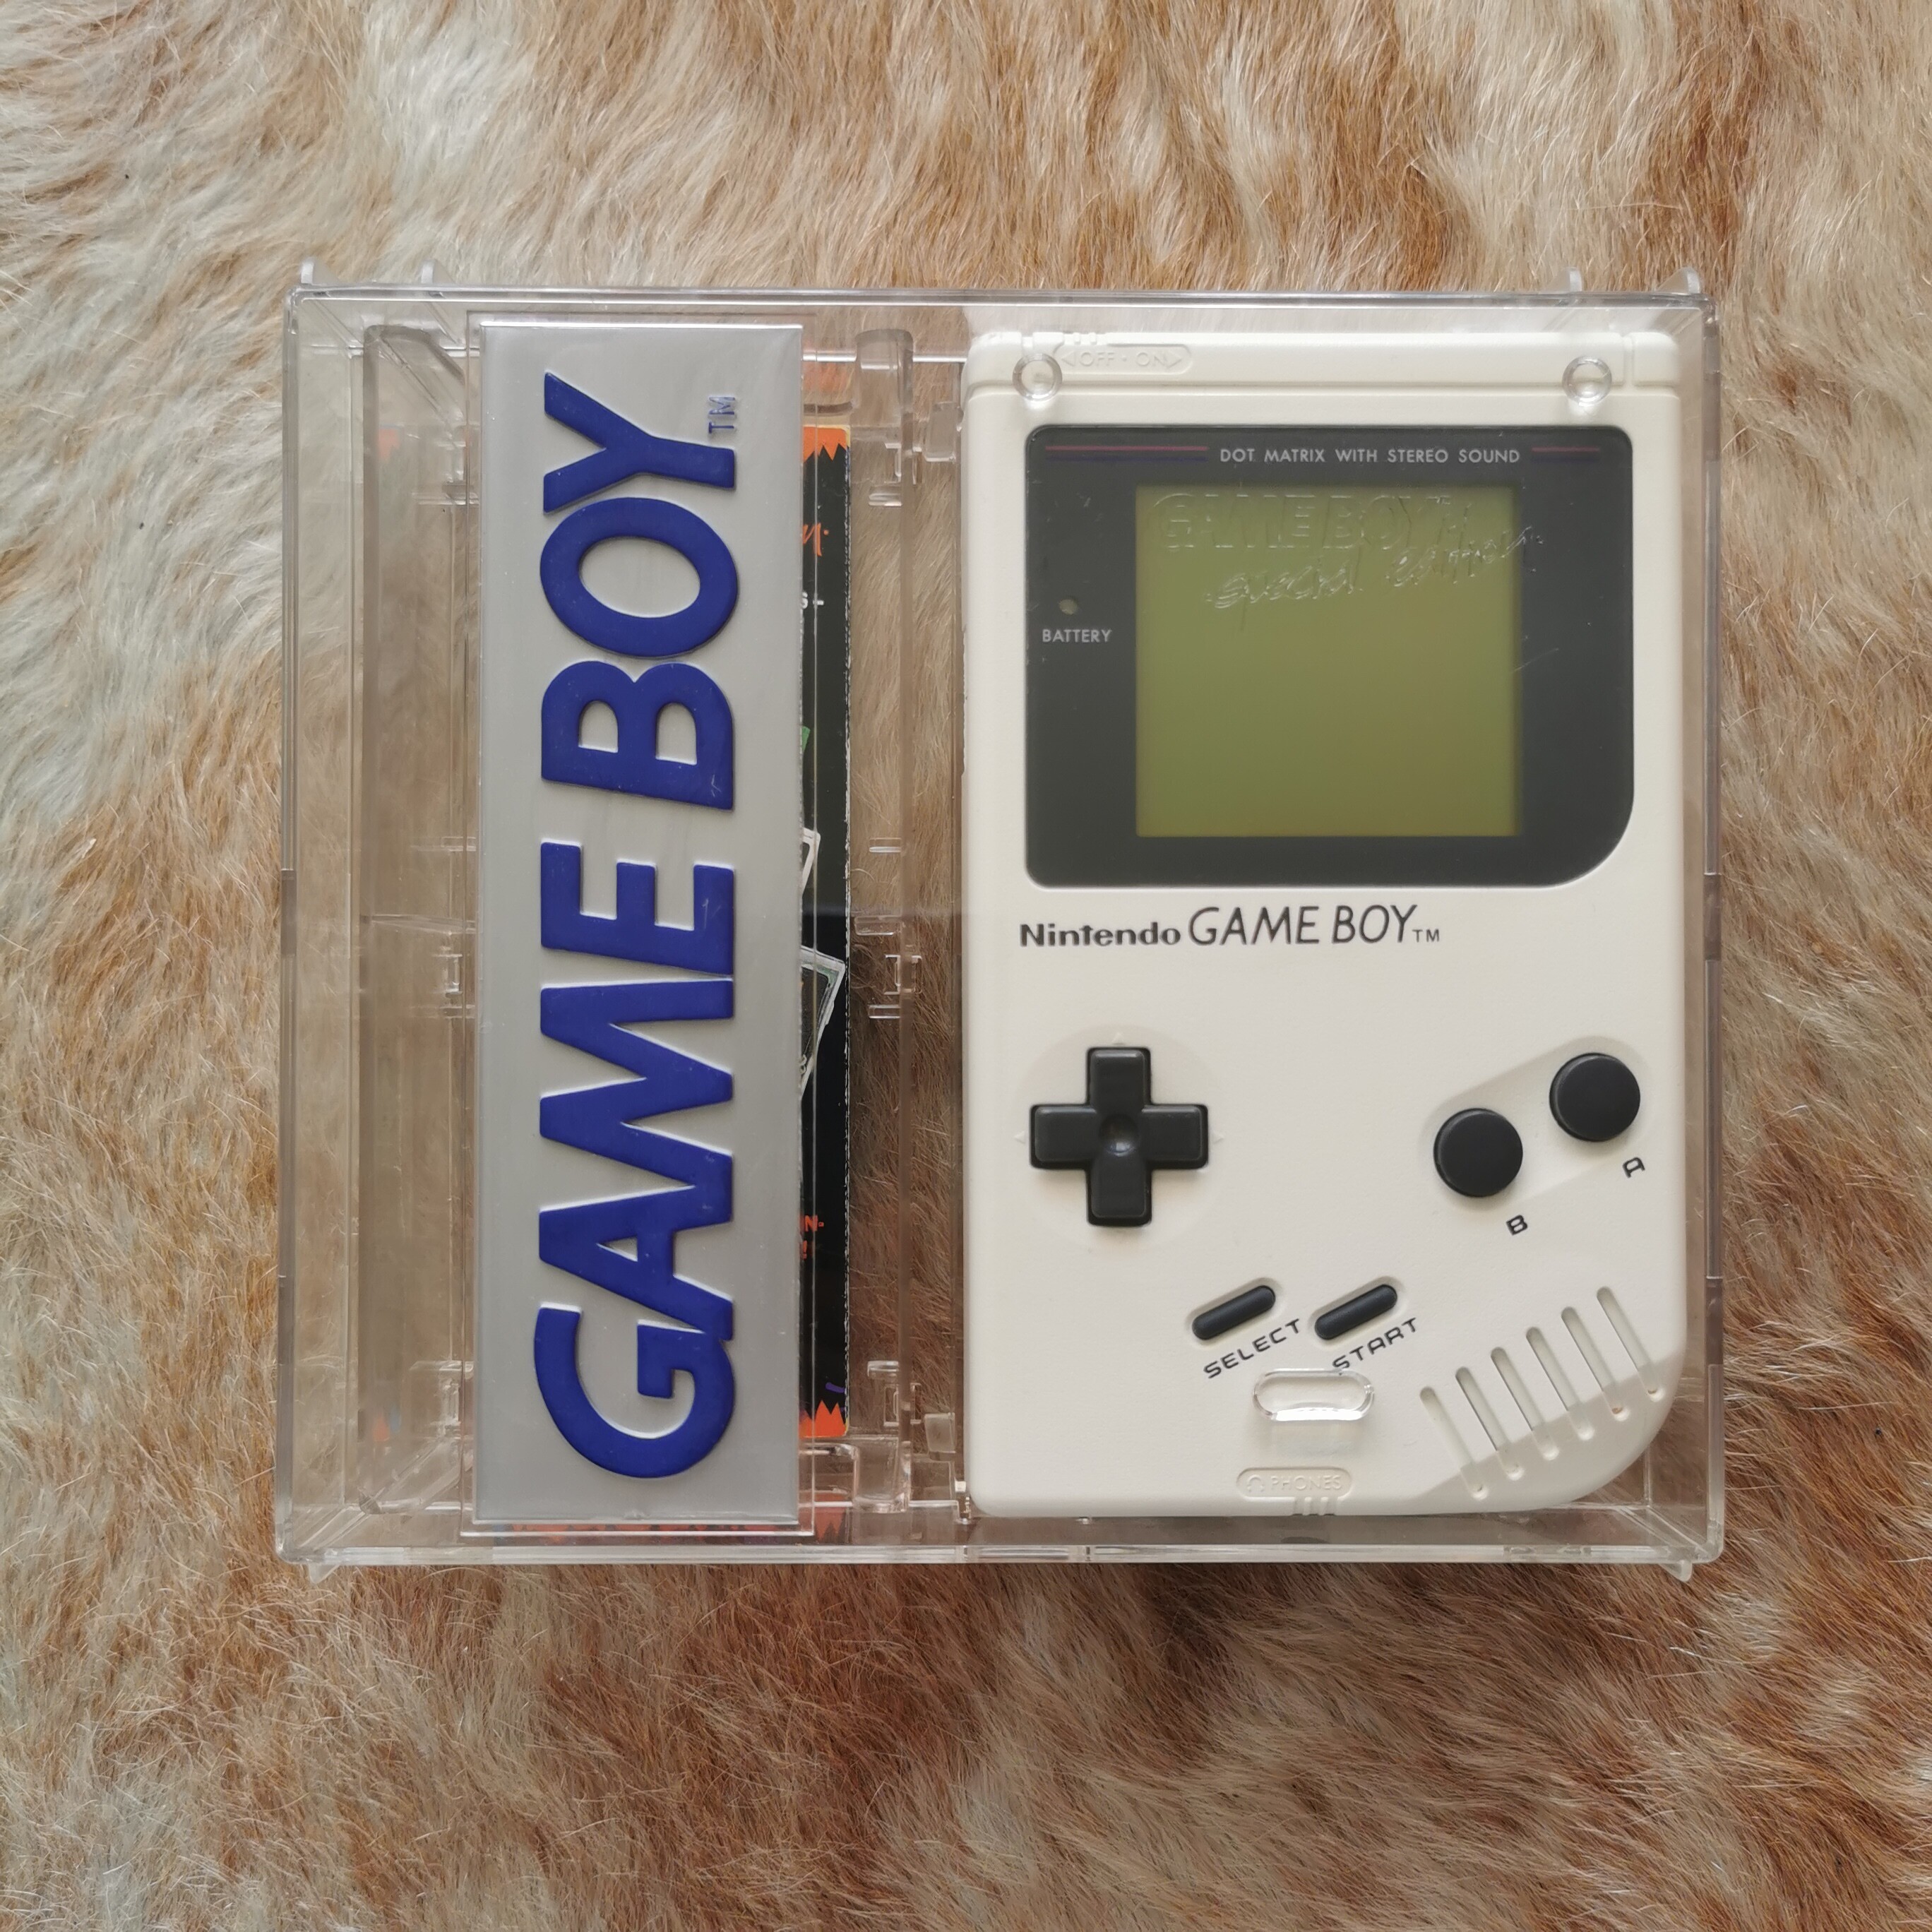  Nintendo Game Boy Crystal Case White Console [NOE]